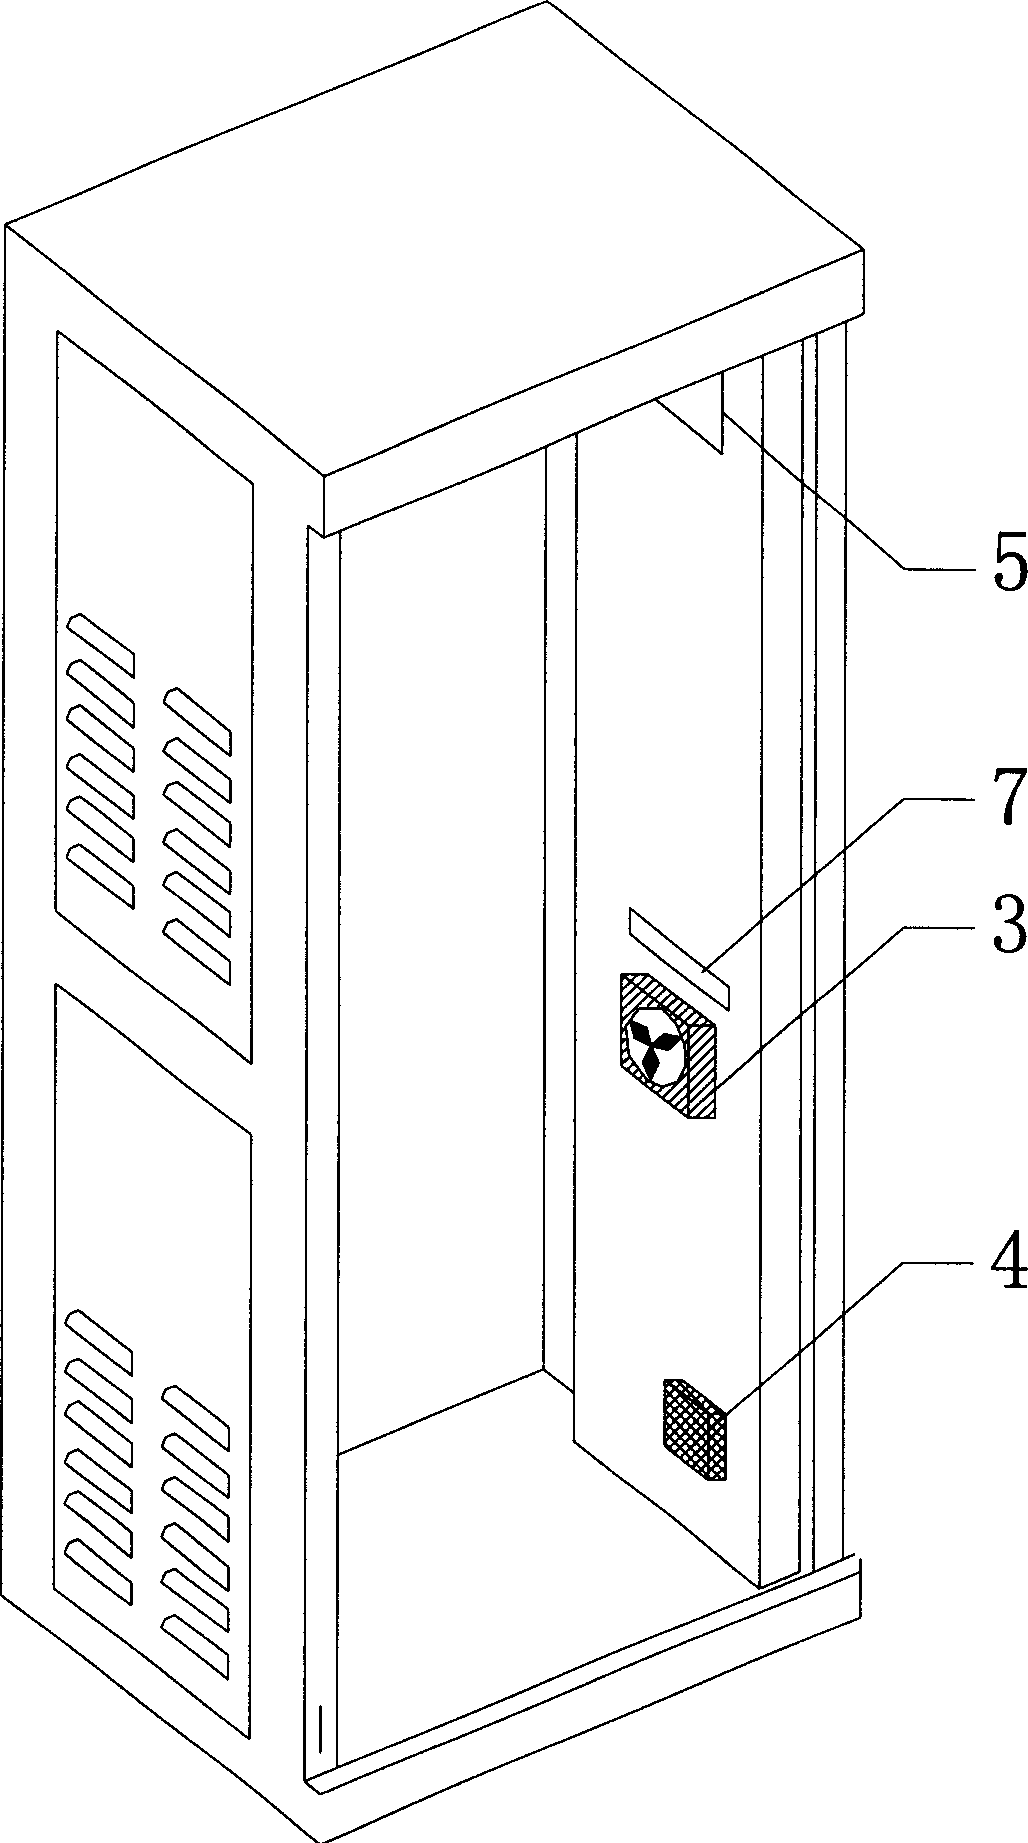 Waterproof and dustproof power distribution cabinet